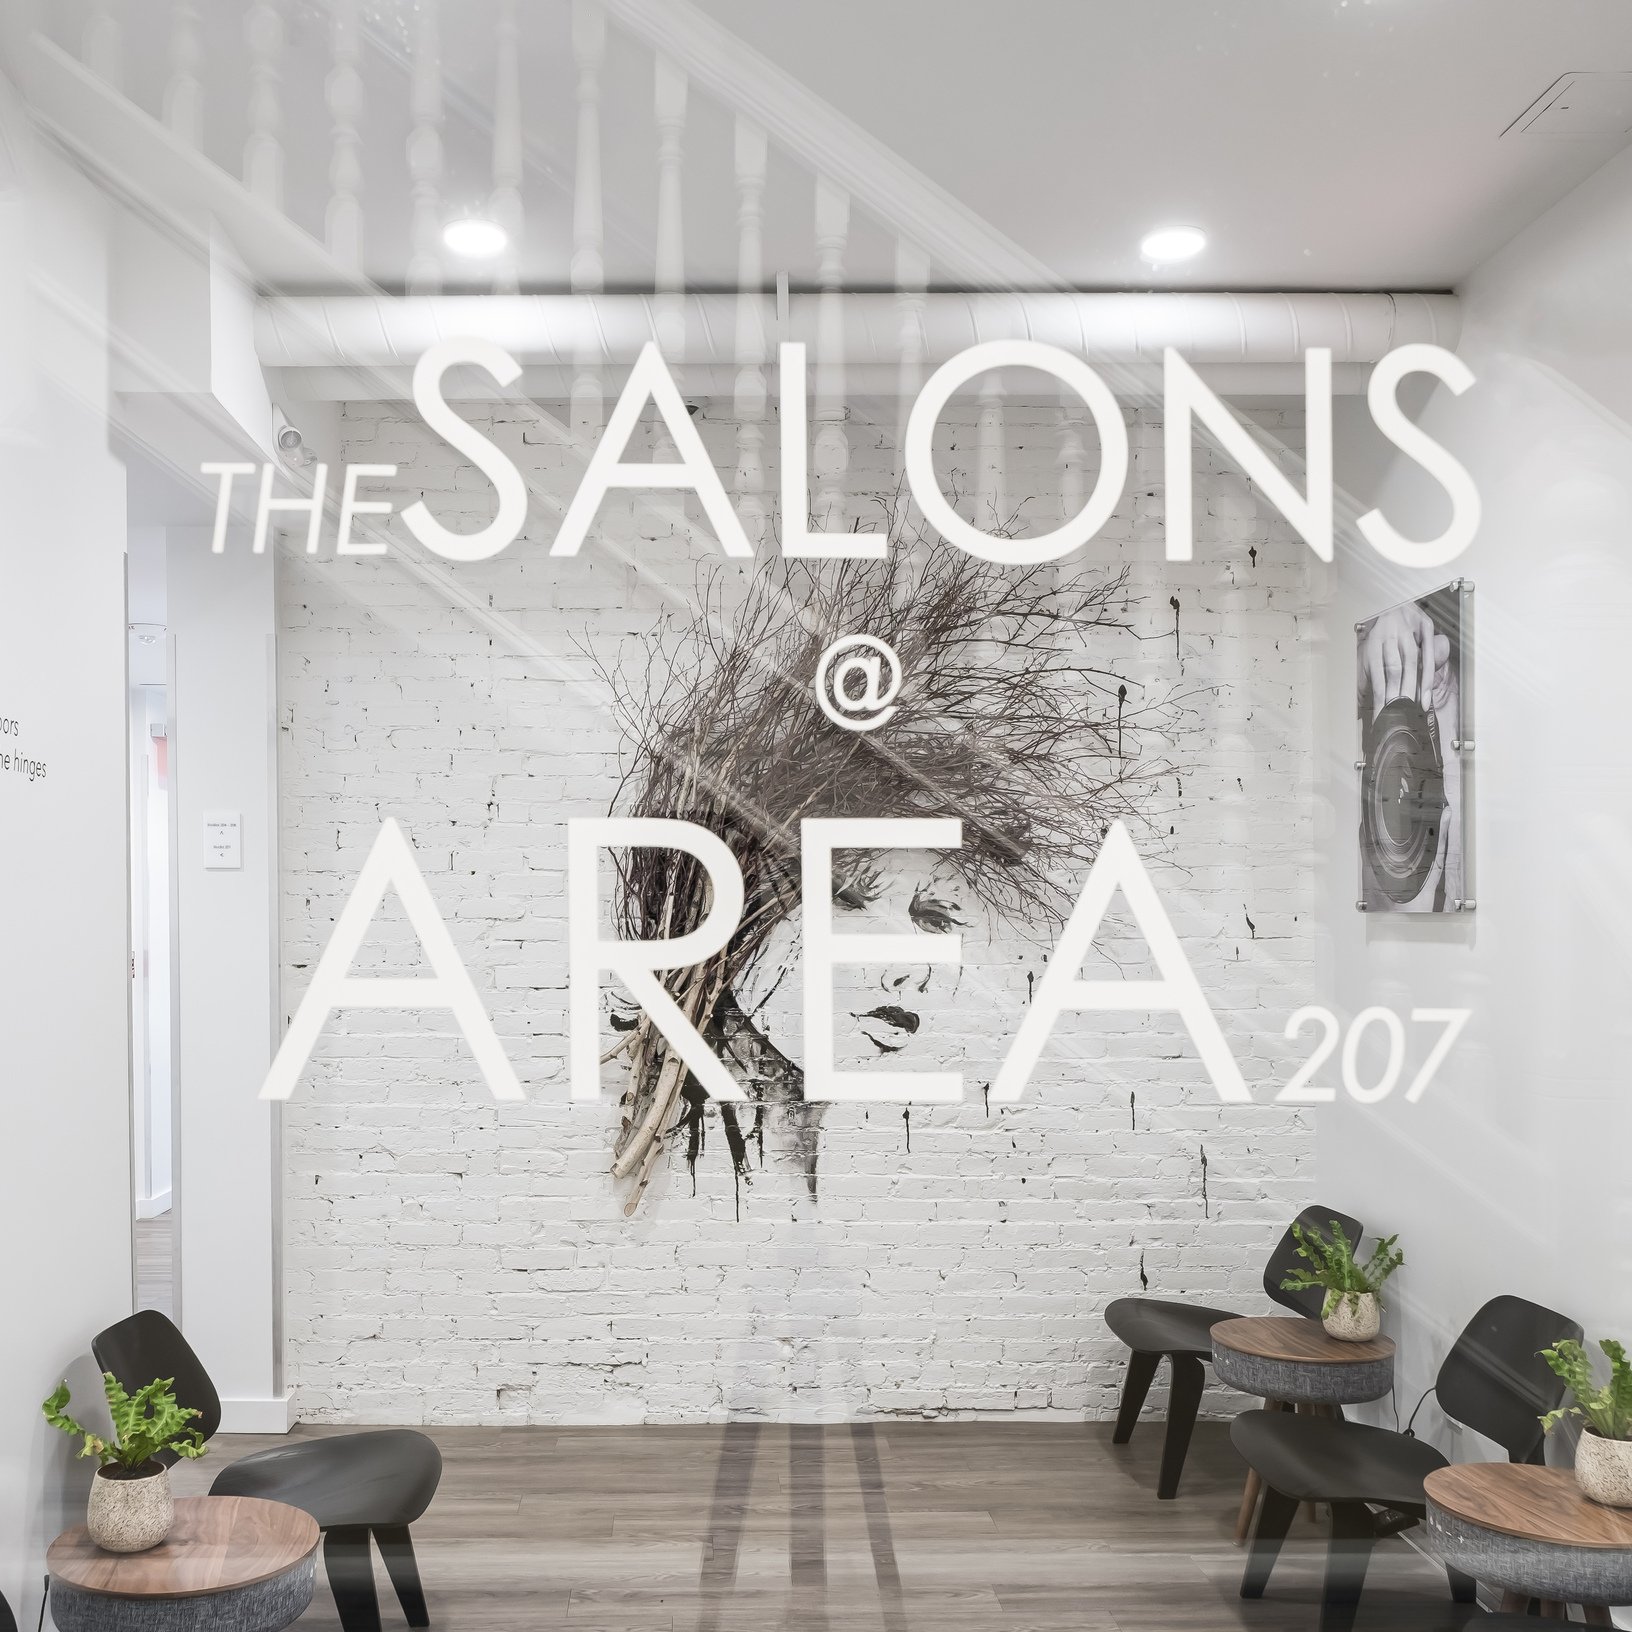 The Salons at Area 207 Newbury Street Back Bay Boston